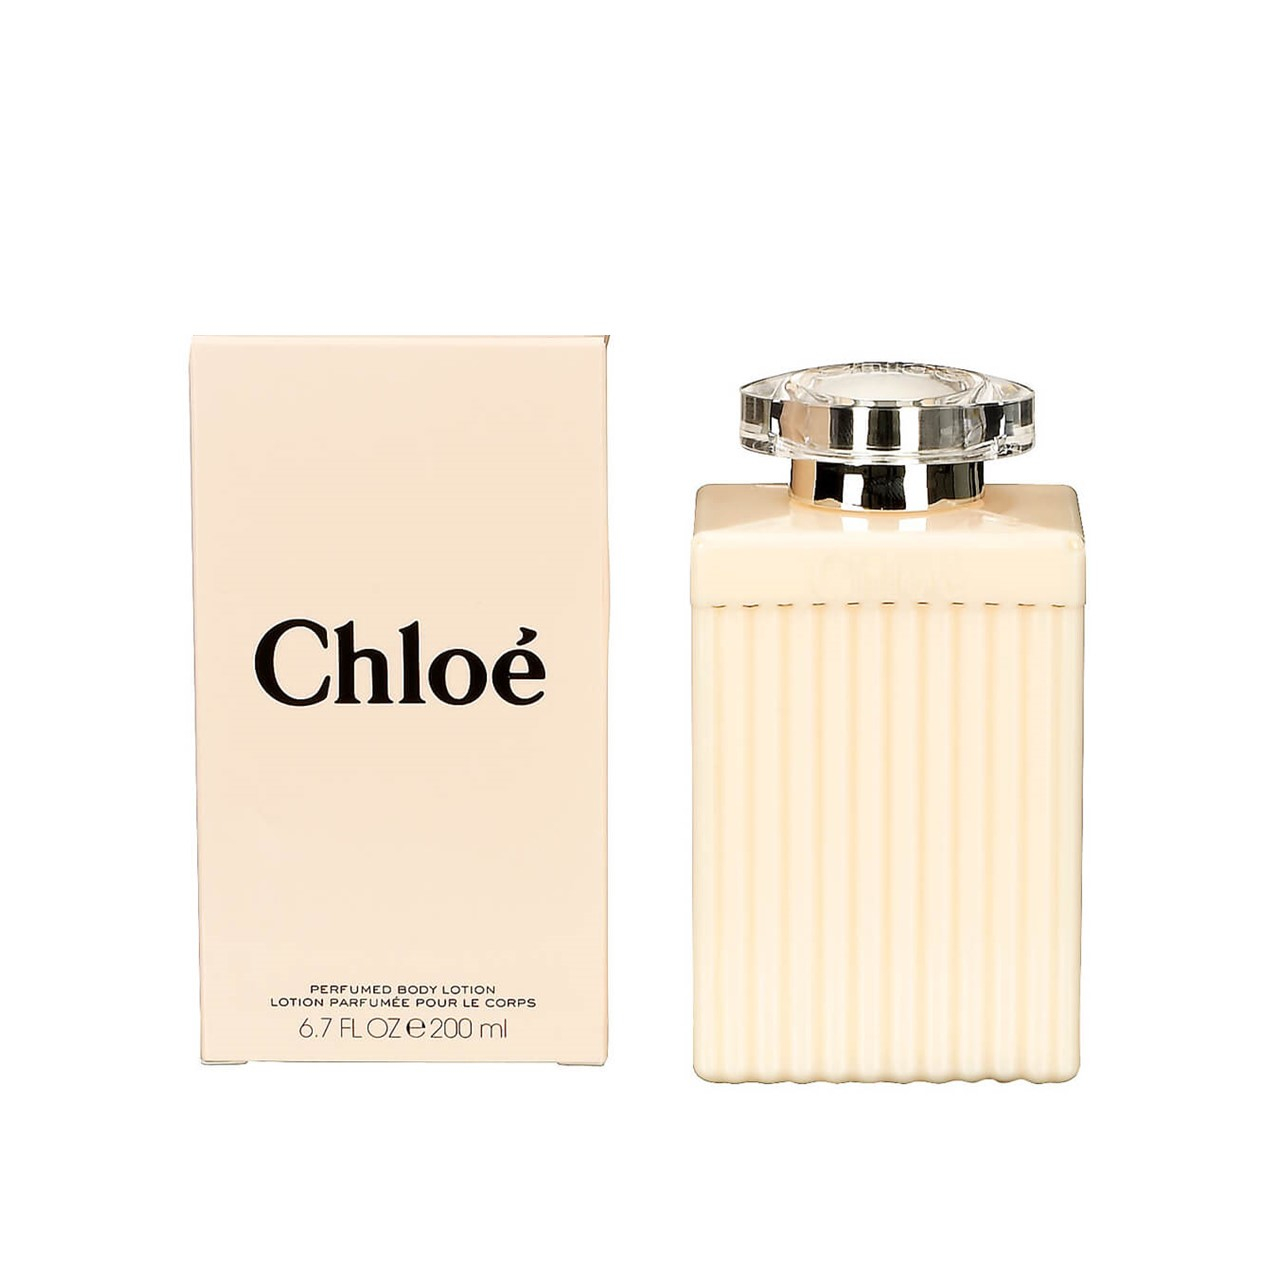 Chloé Perfumed Body Lotion 200ml (6.76floz)